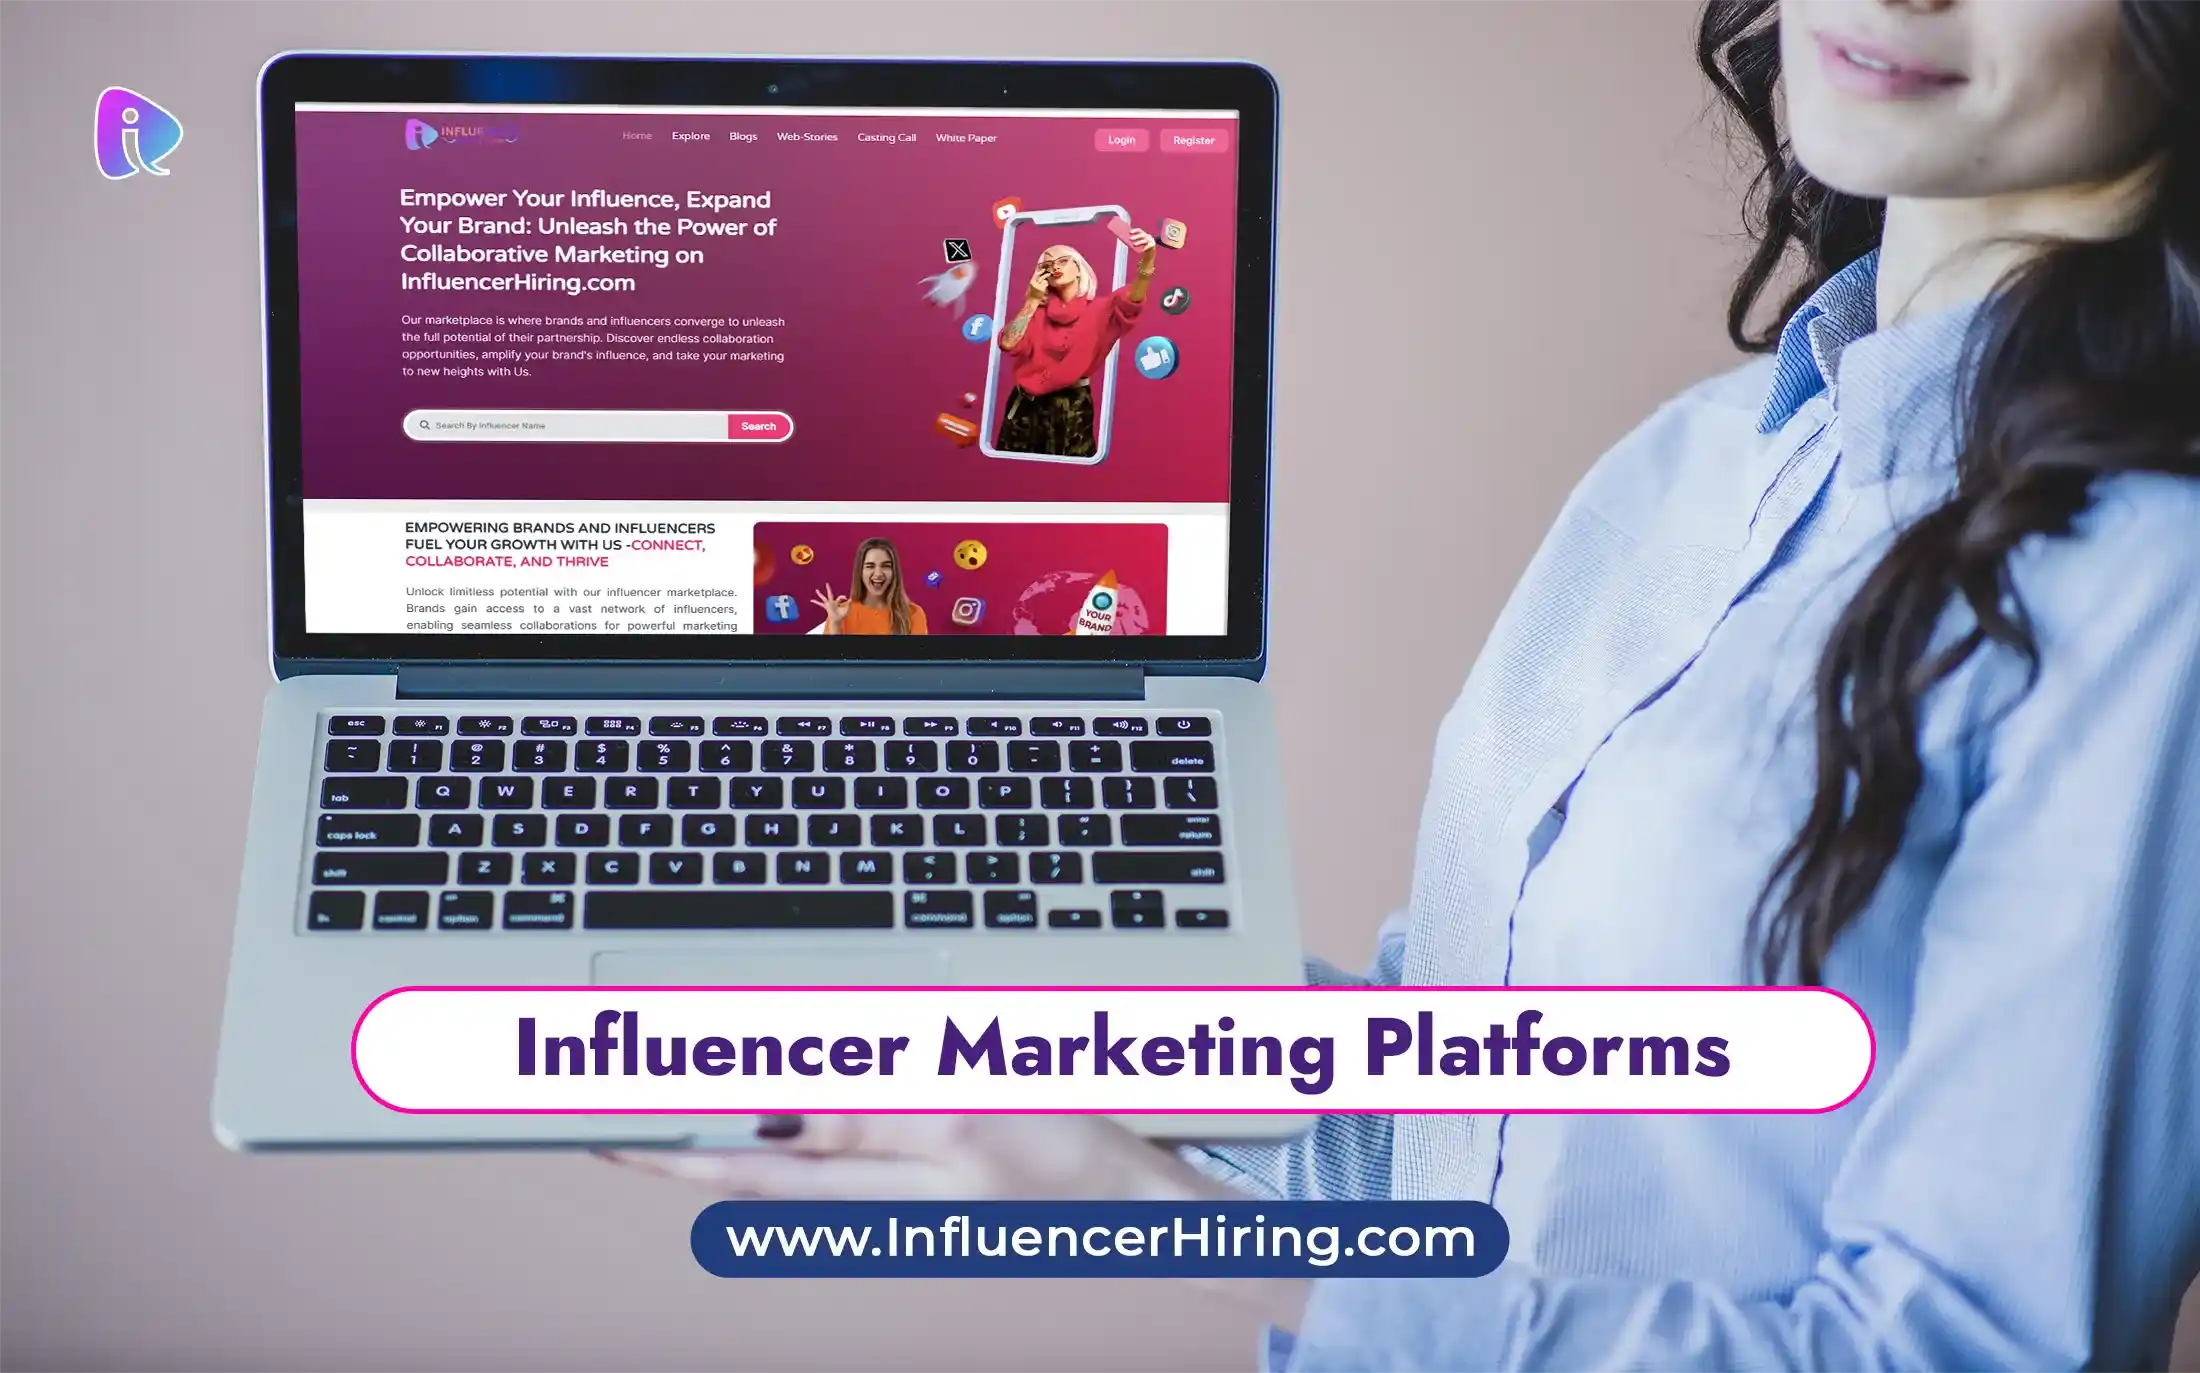 012_influencer_marketing_platforms.webp